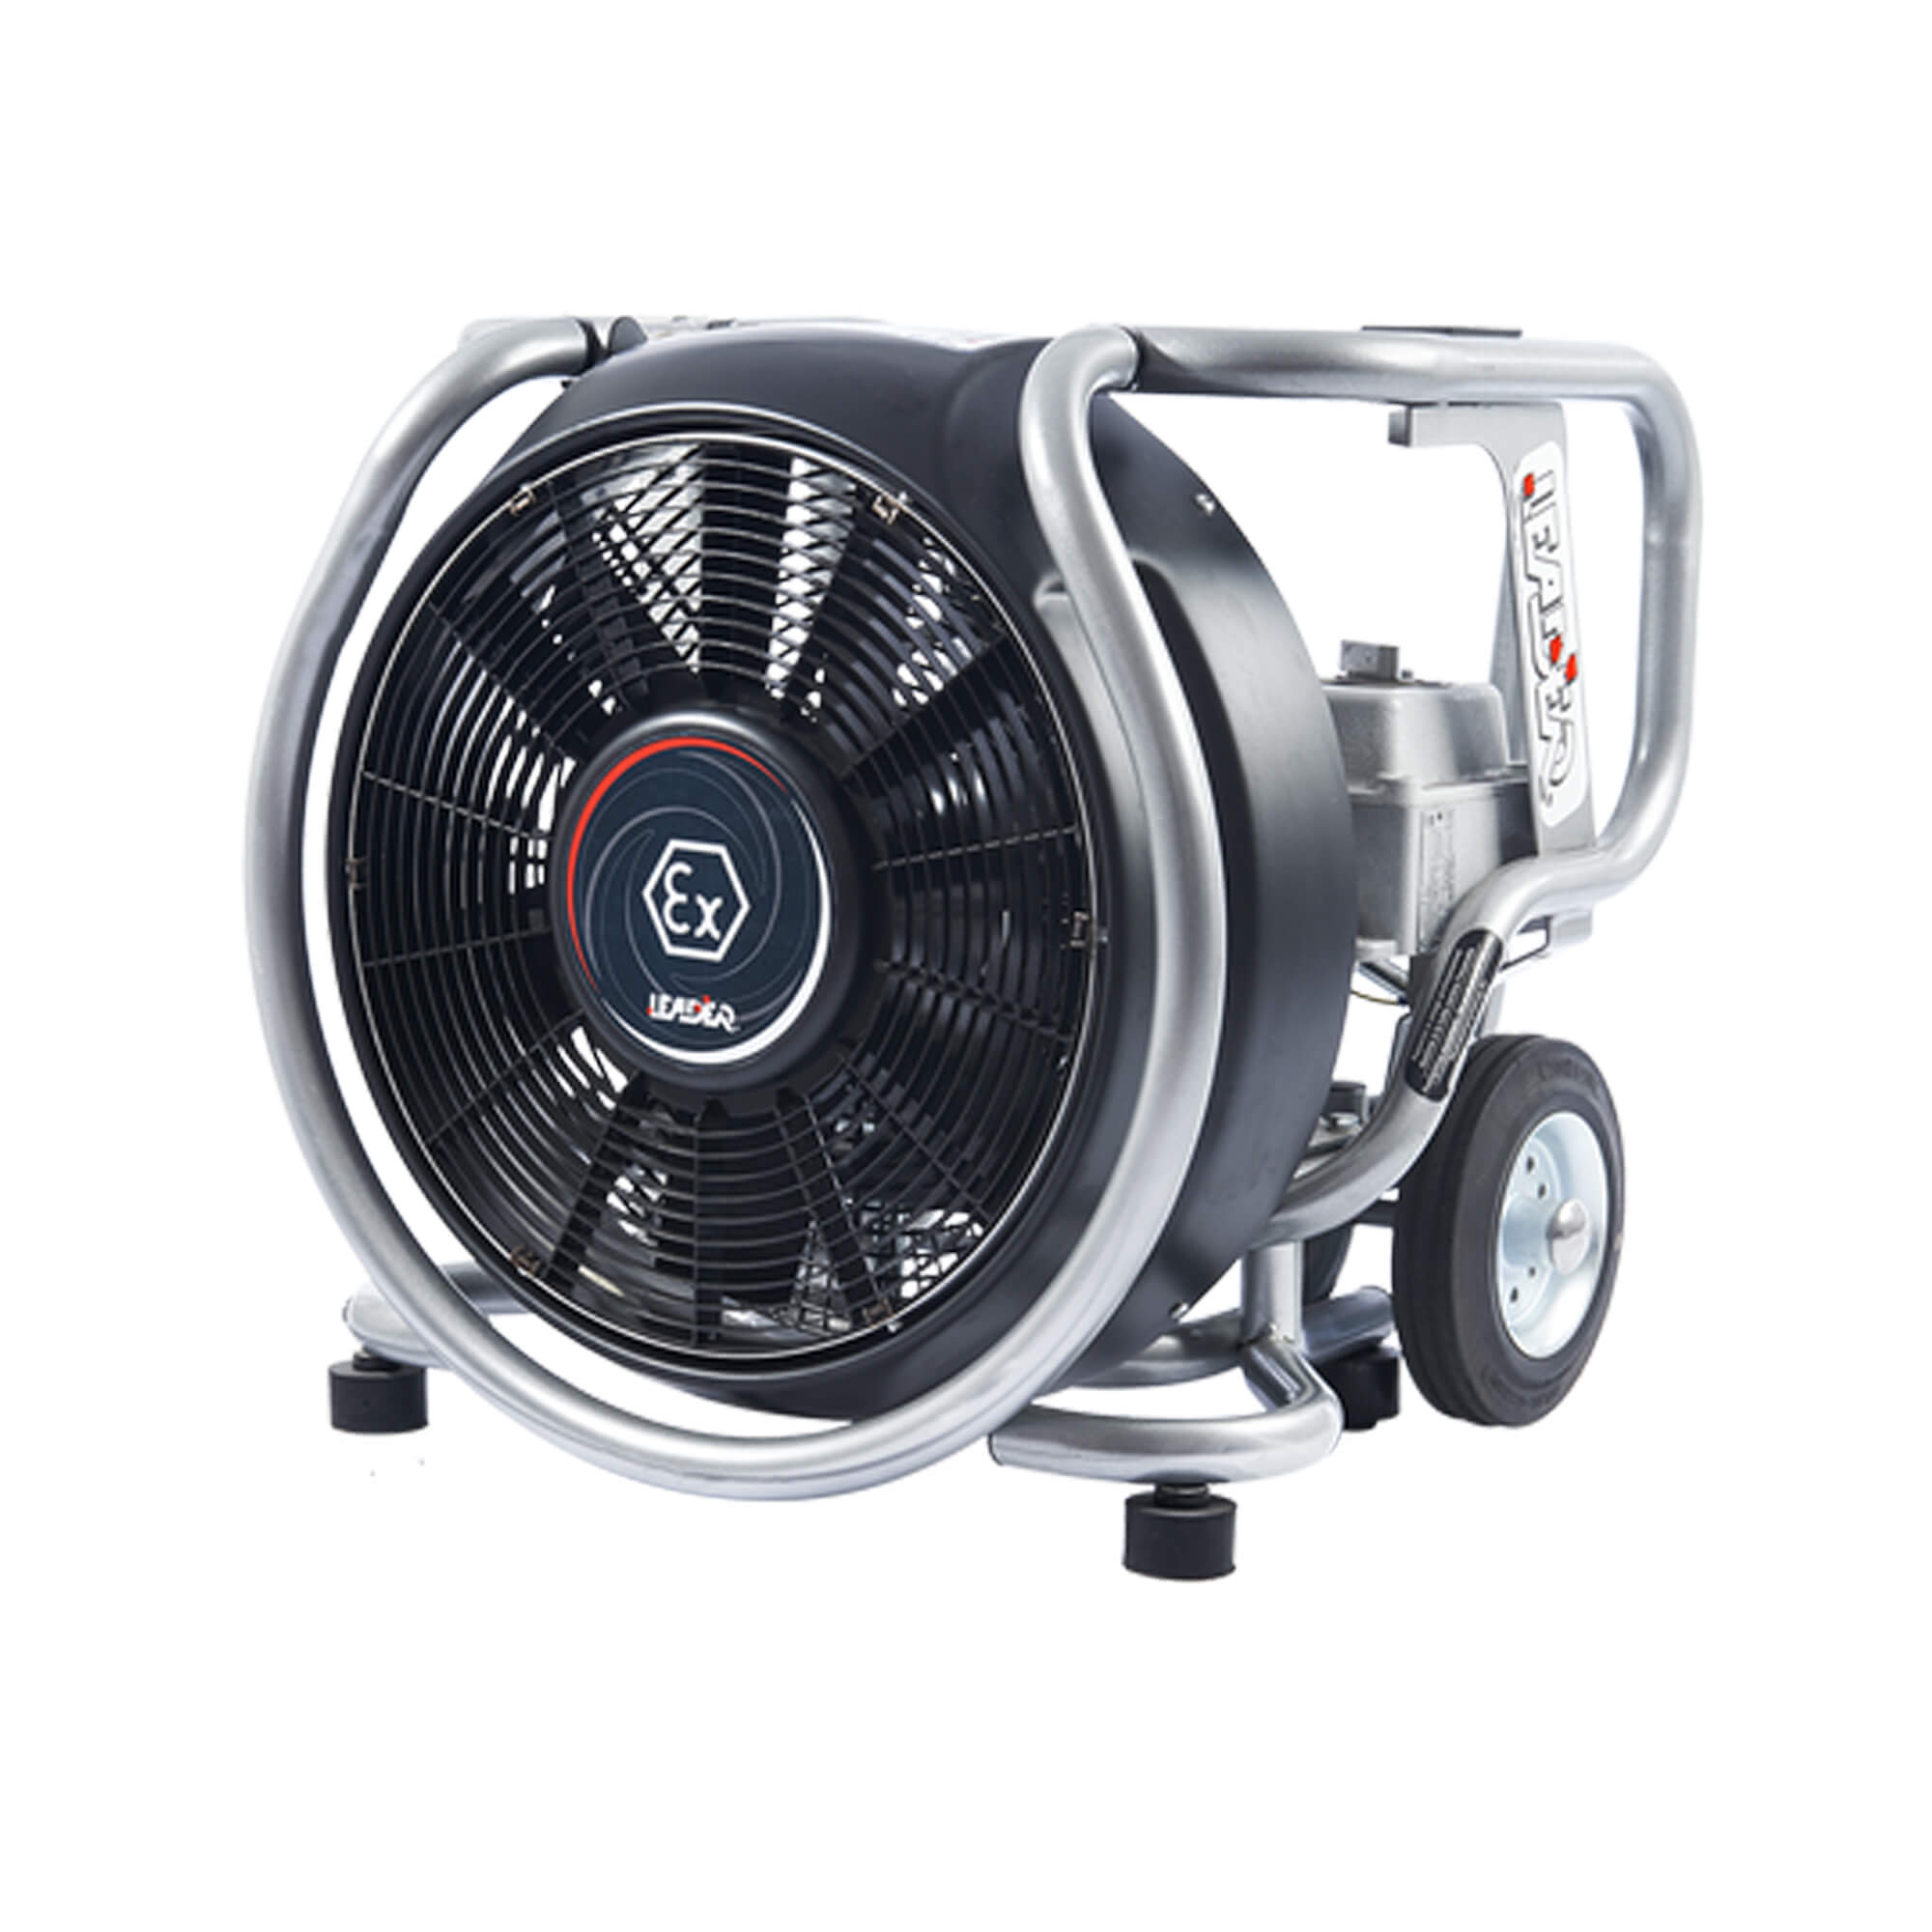 ATEX electric fan ESX230 - 30,000 m³/h